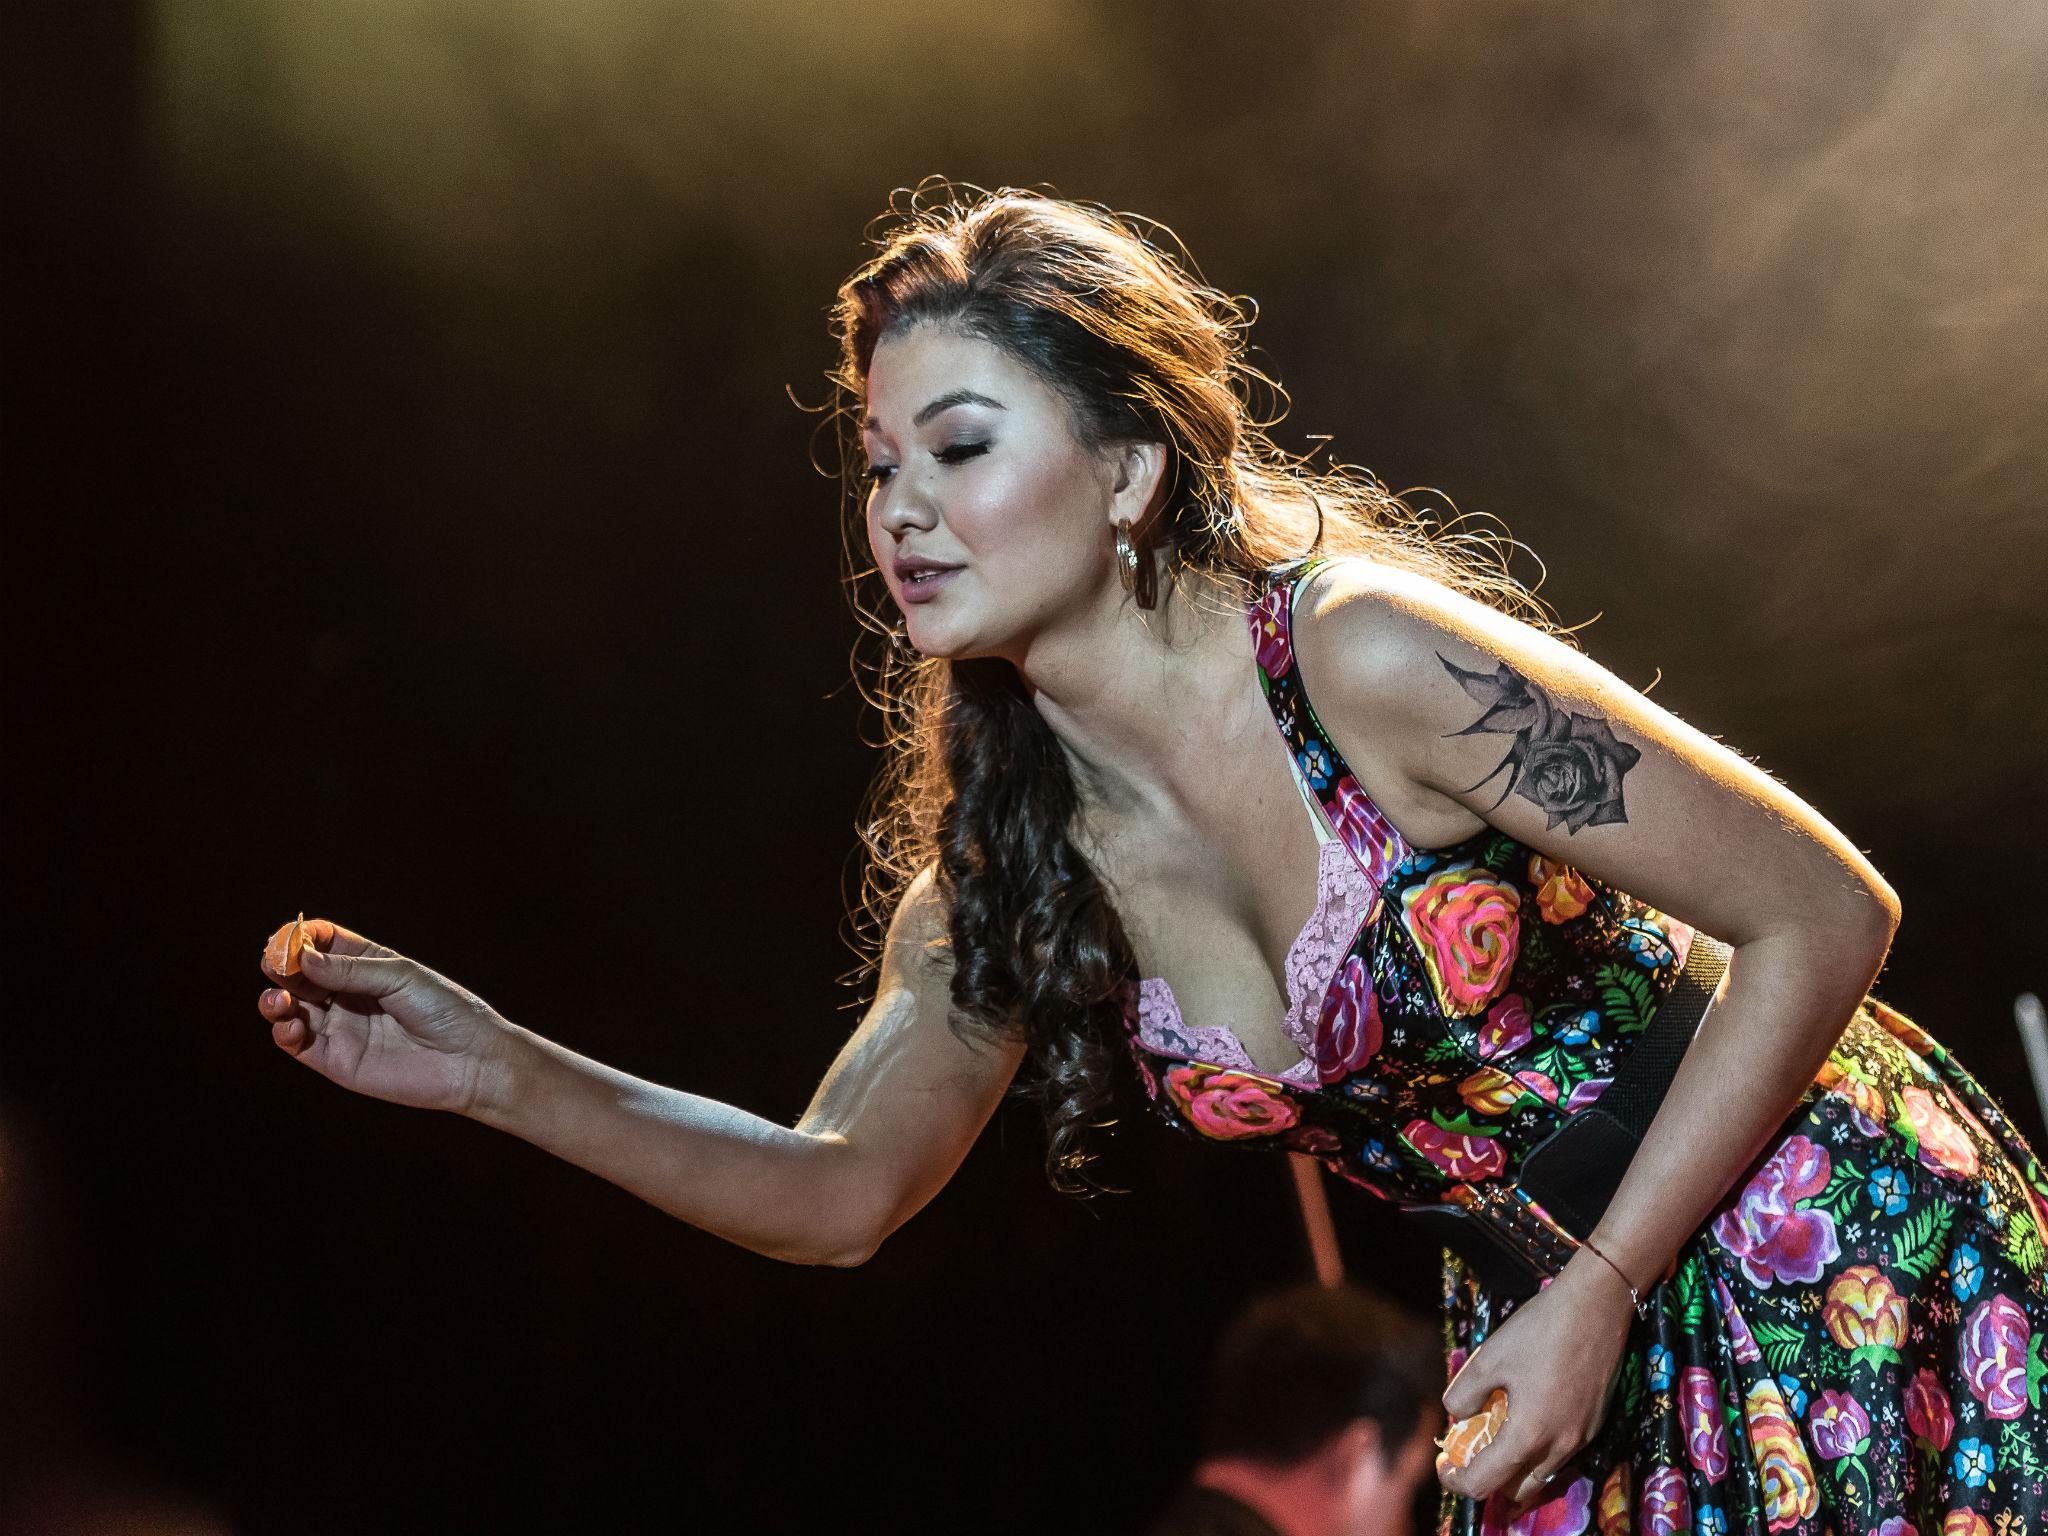 The Russian mezzo-soprano Aigul Akhmetshina's Carmen is provocatively sexual